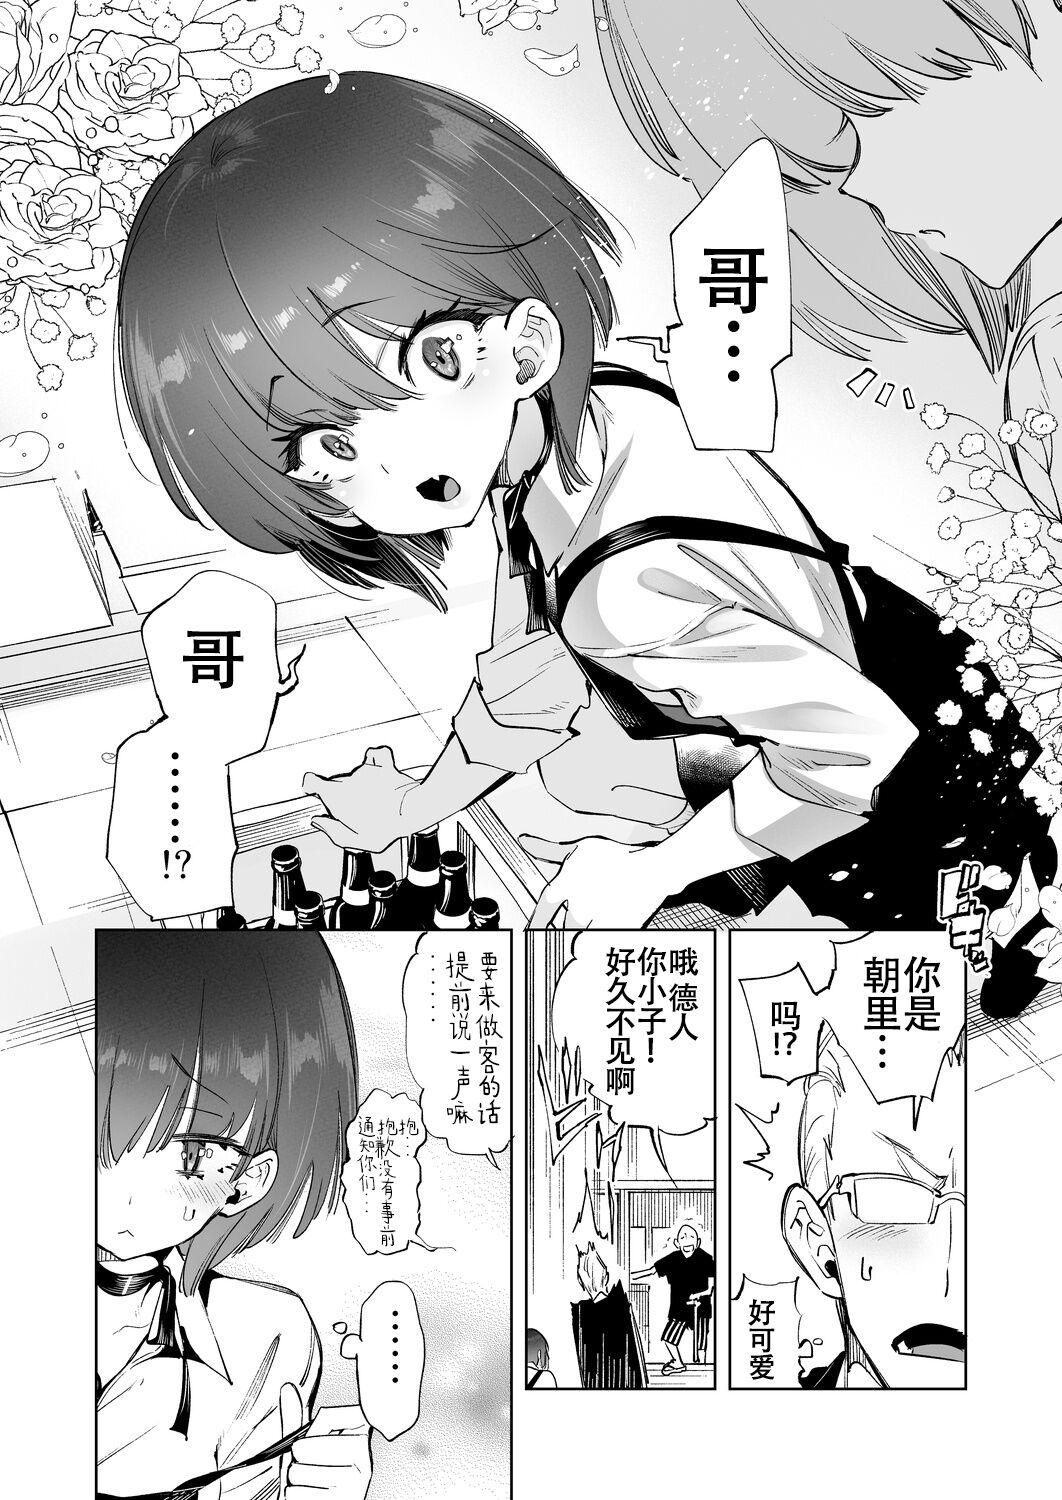 Perverted 2haku 3ka no Hanayome 3 years after - Original Stream - Page 6